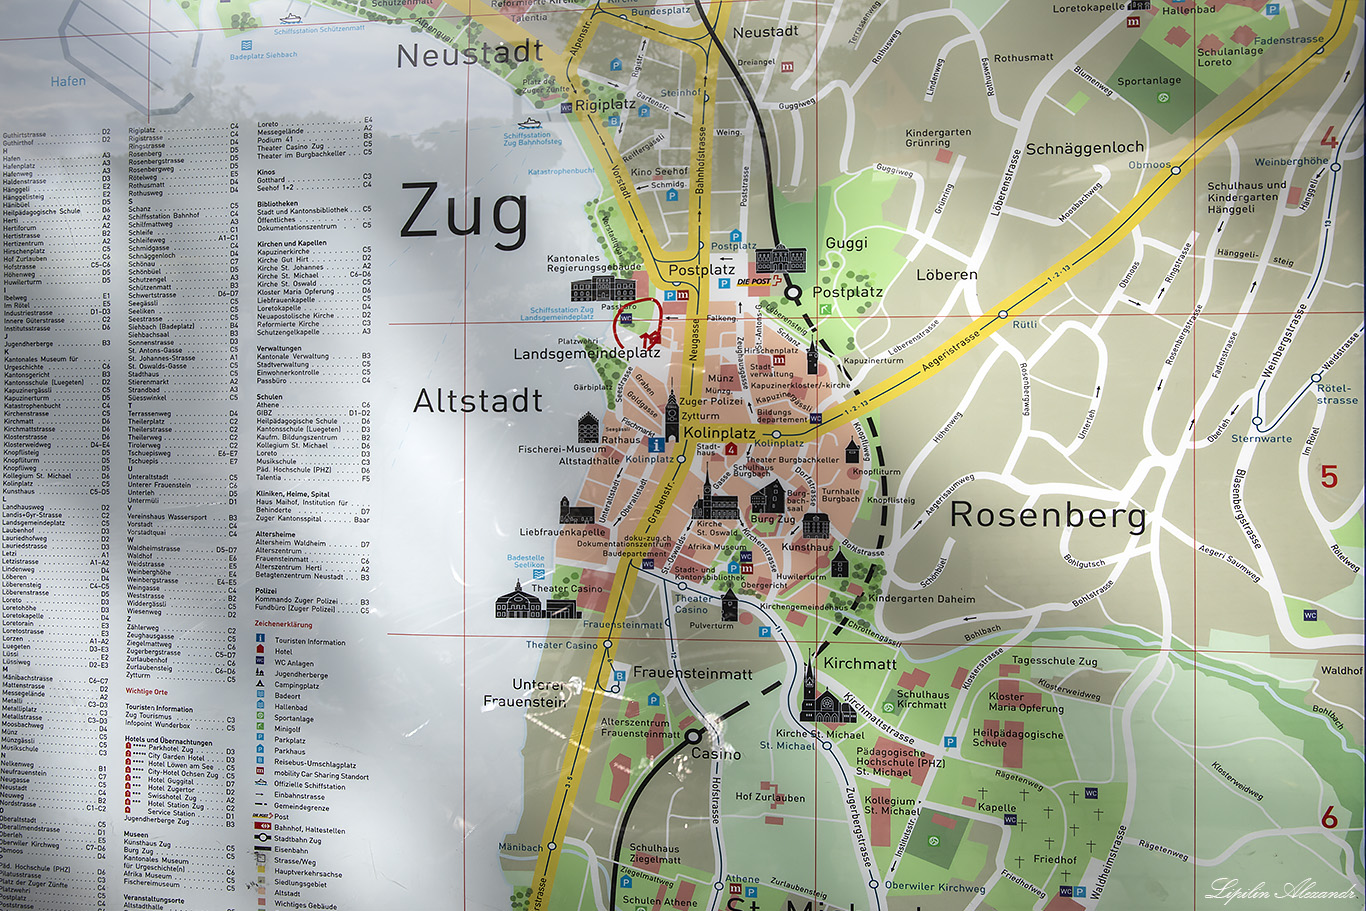 Цуг - туристическая карта (Zug - map) - Швейцария (Switzerland)